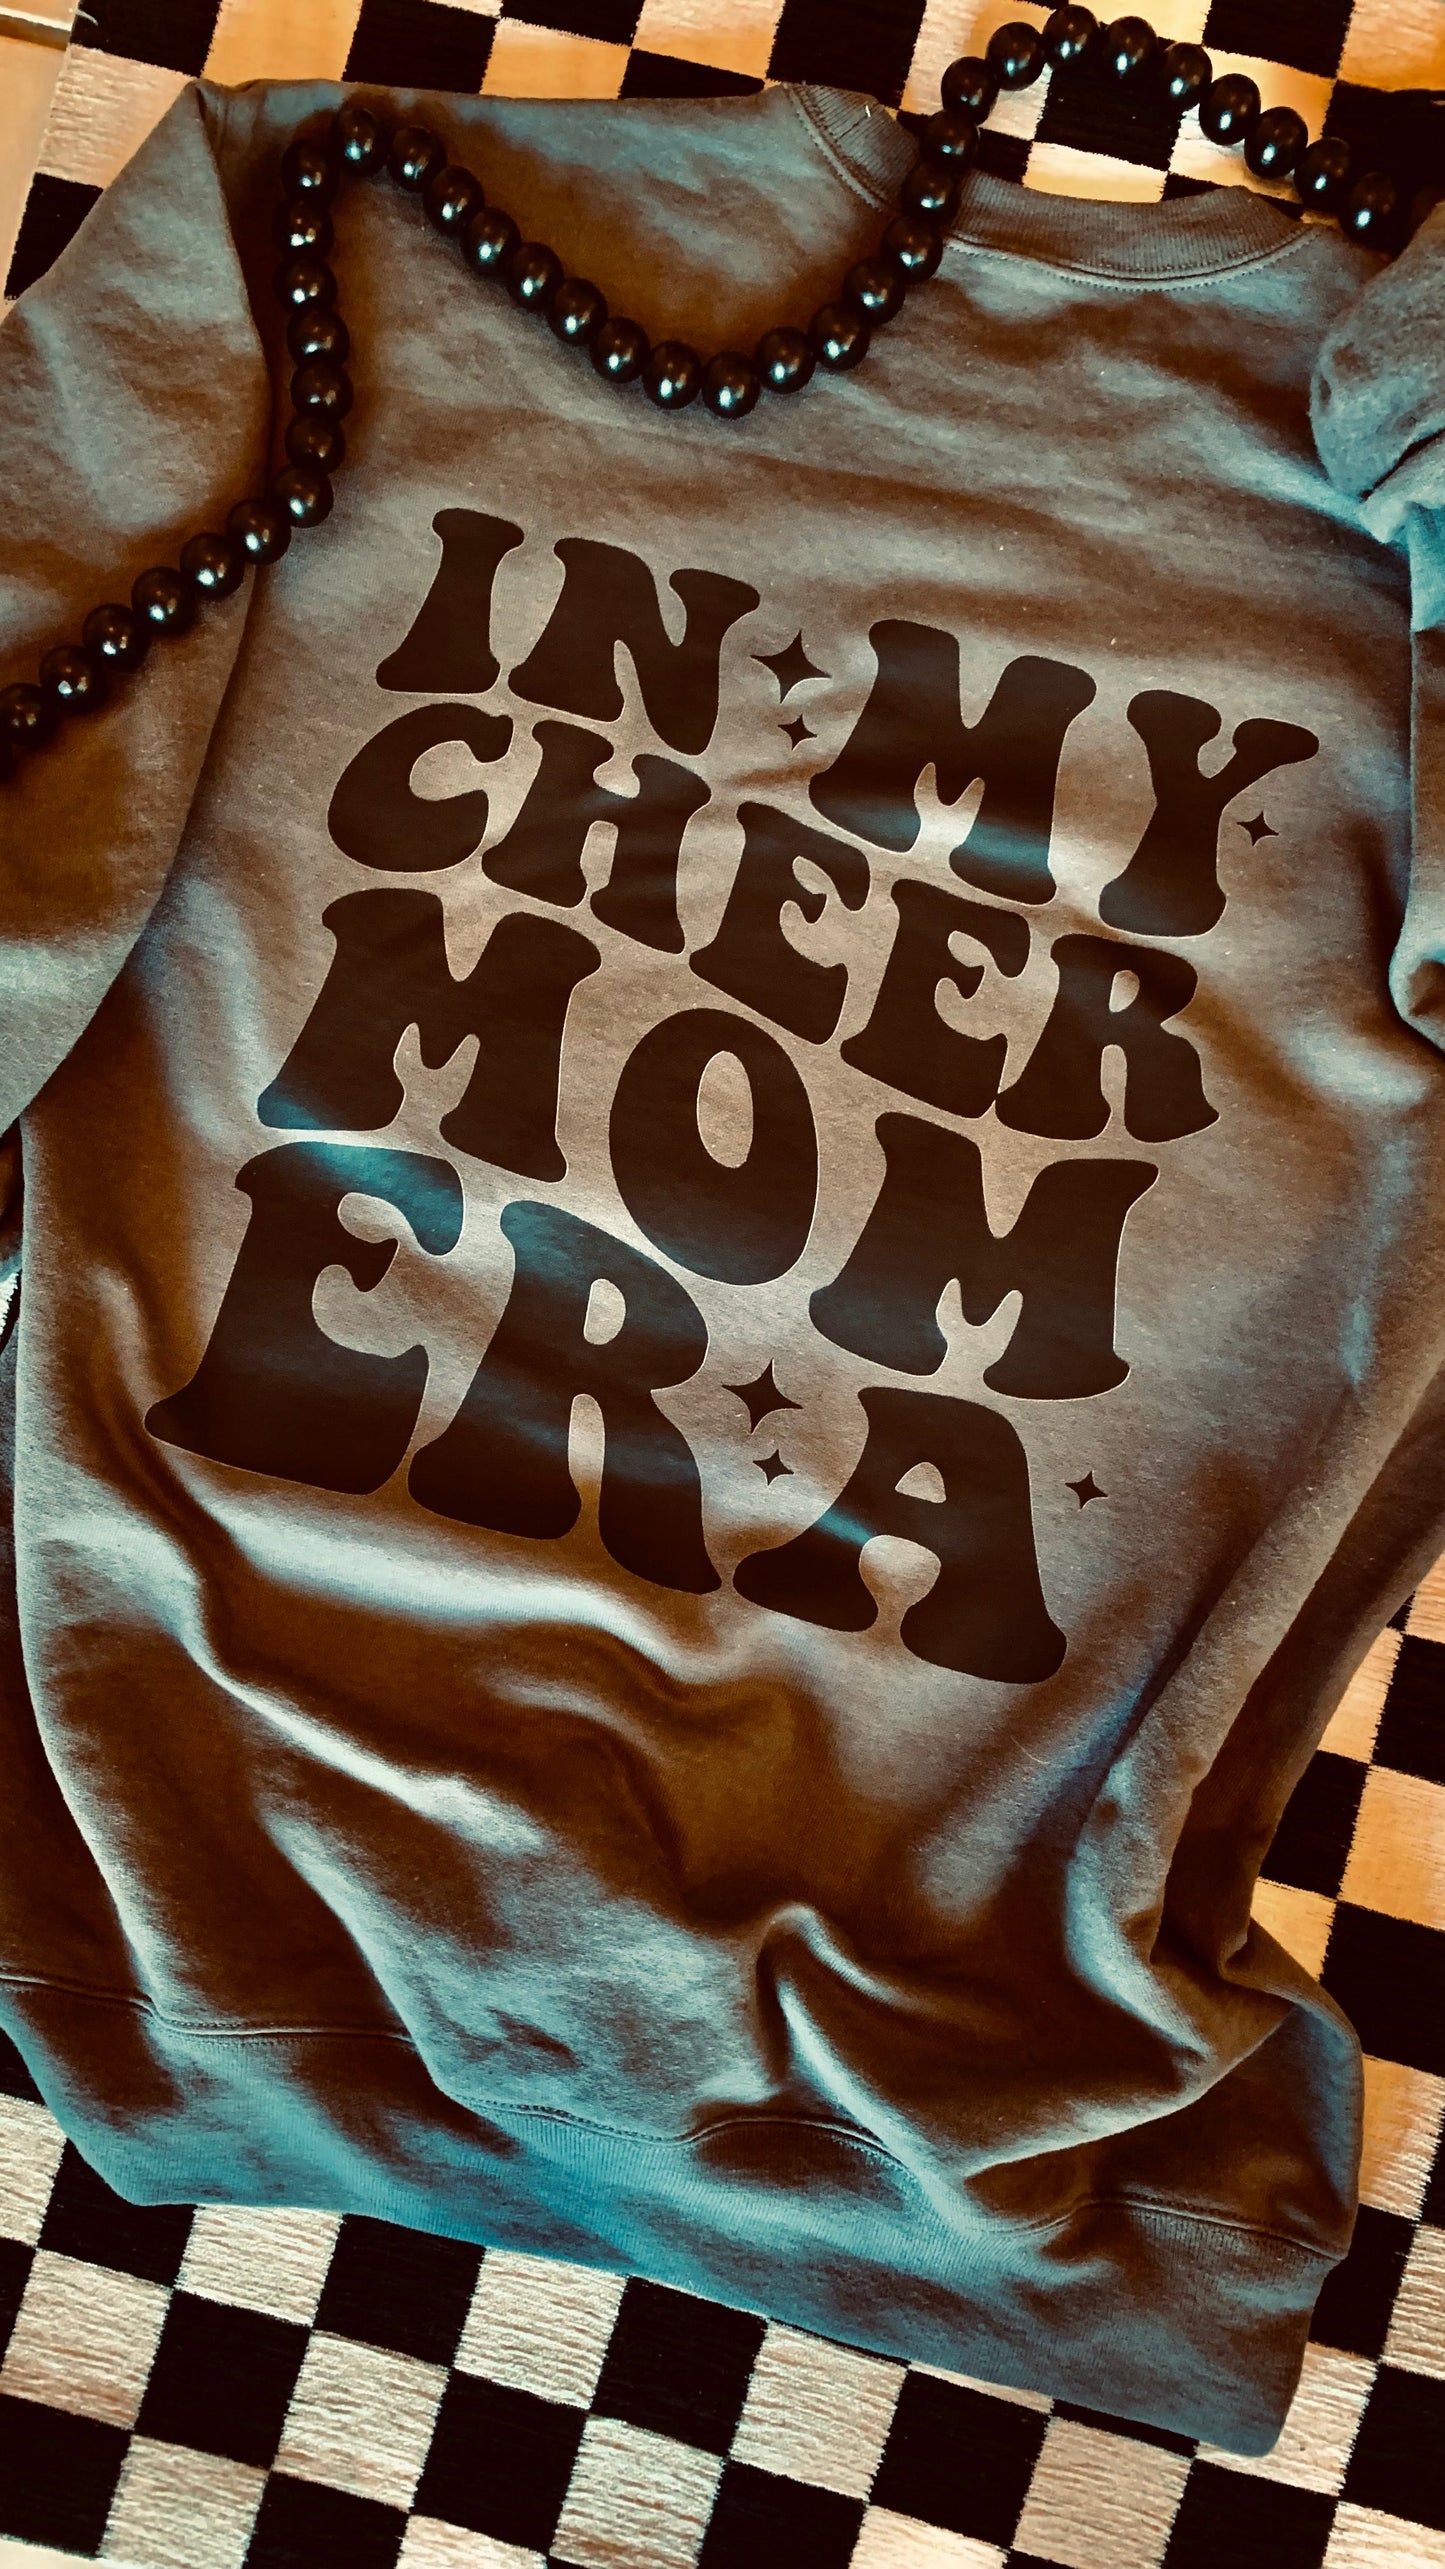 In my Cheer Mom Era